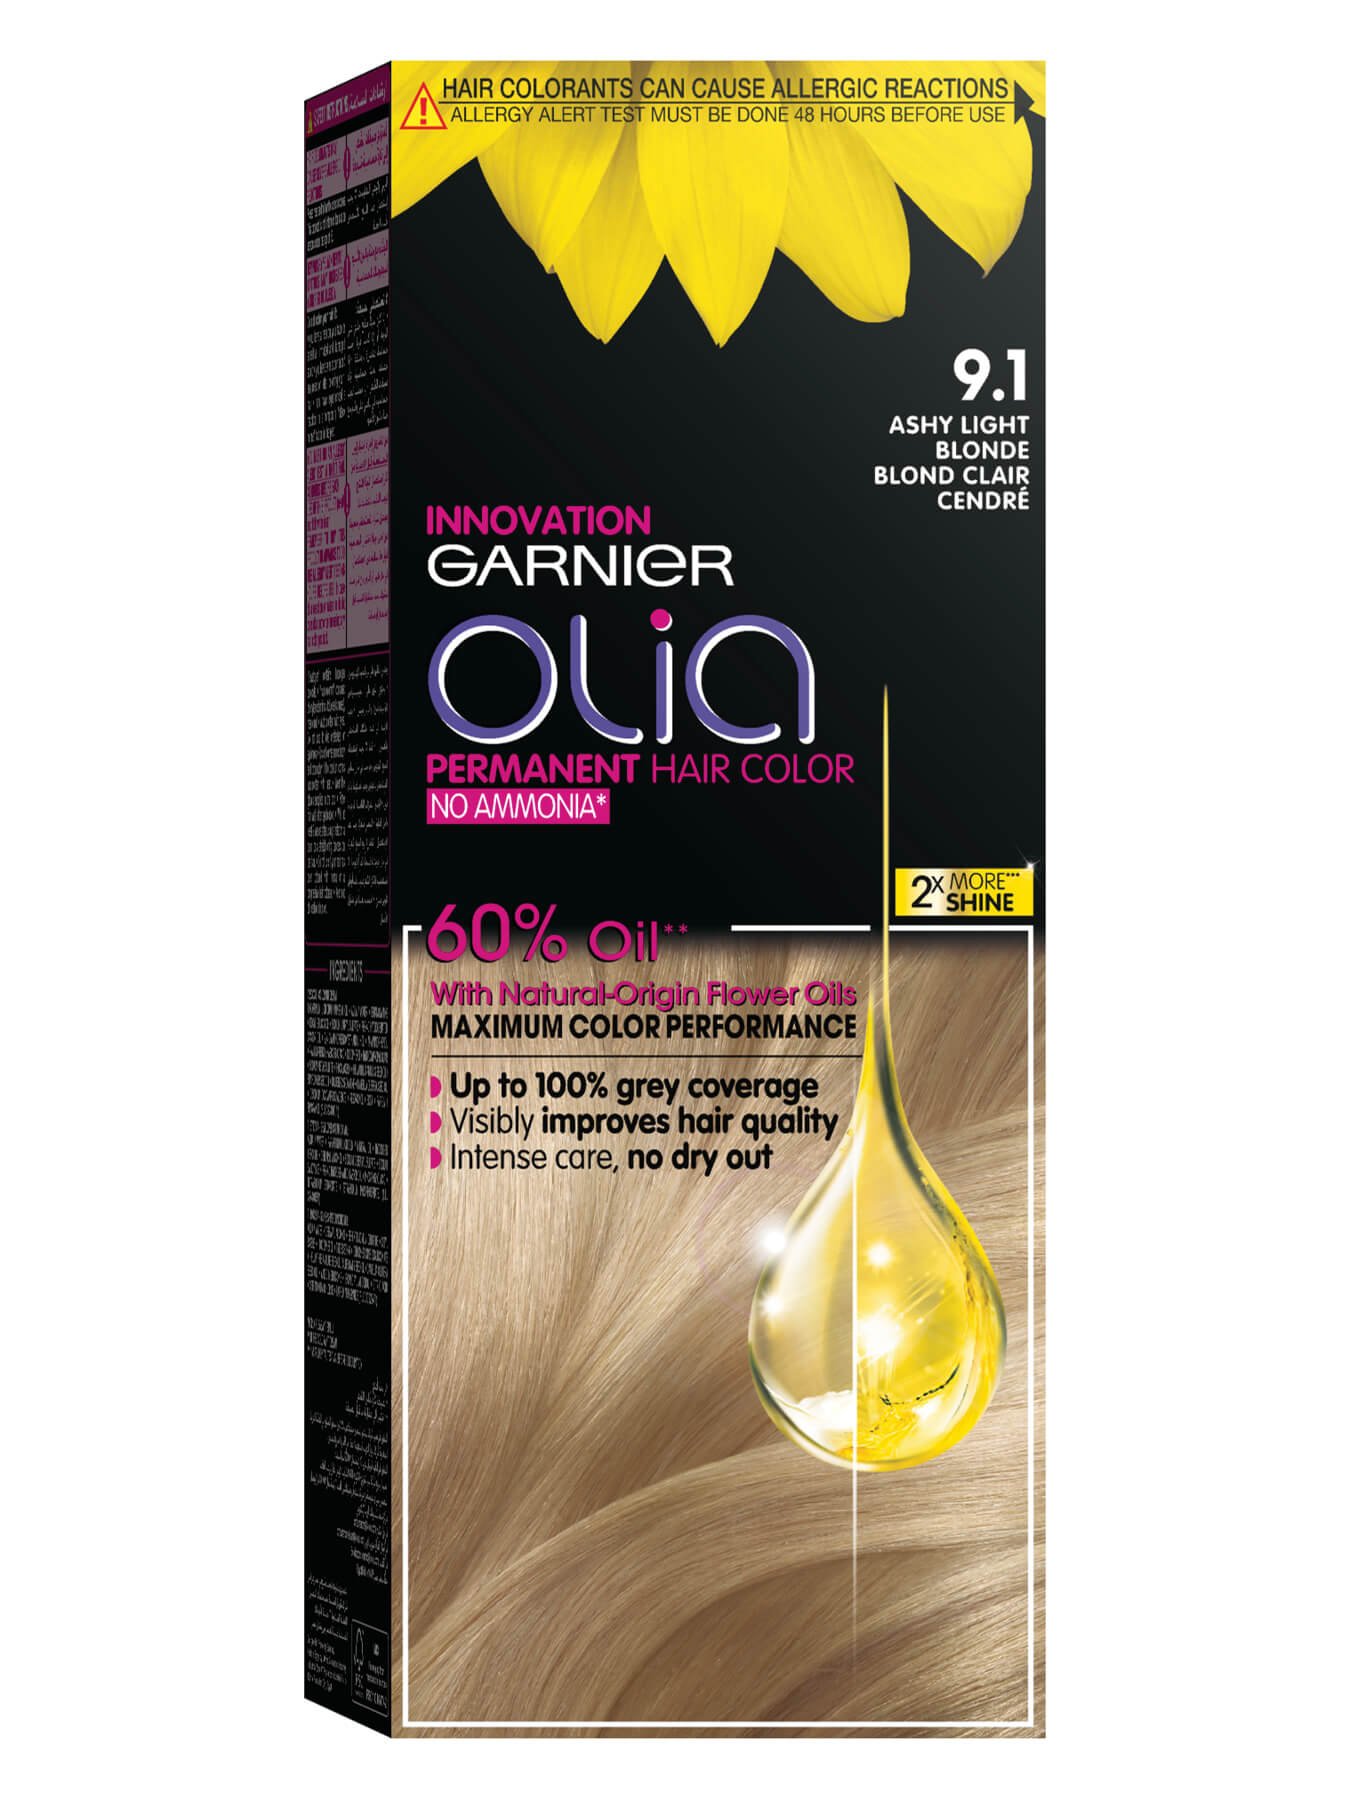 Garnier Olia,  Ashy Light Blonde, No Ammonia Permanent Haircolor, with  60% Oils